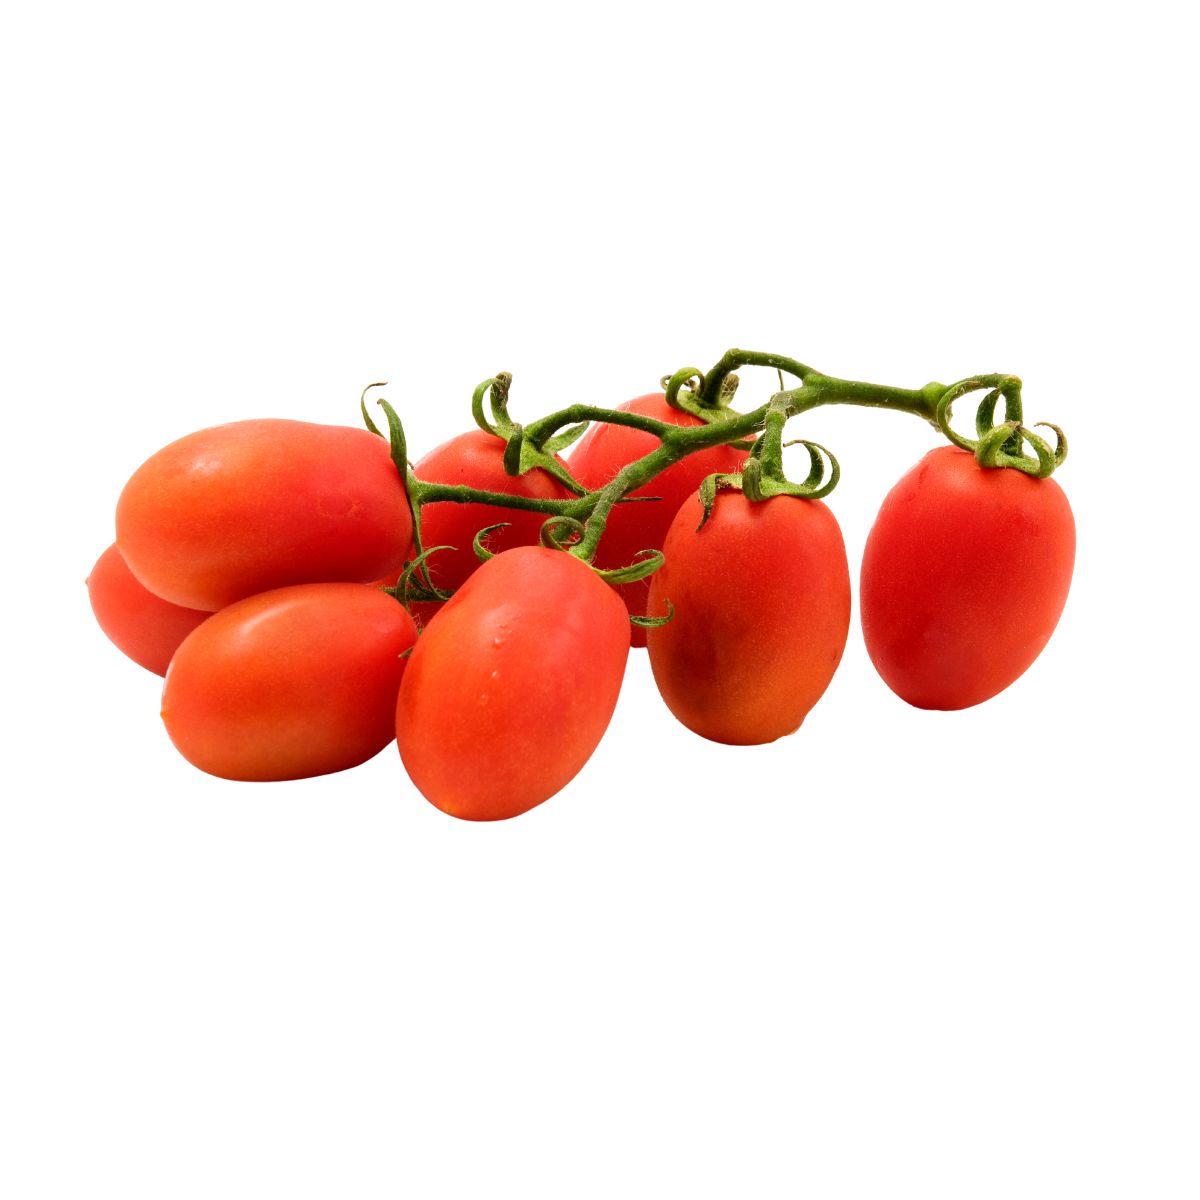 Tomate - Seminte de tomate Roma, 1 gram, FLORIAN, hectarul.ro